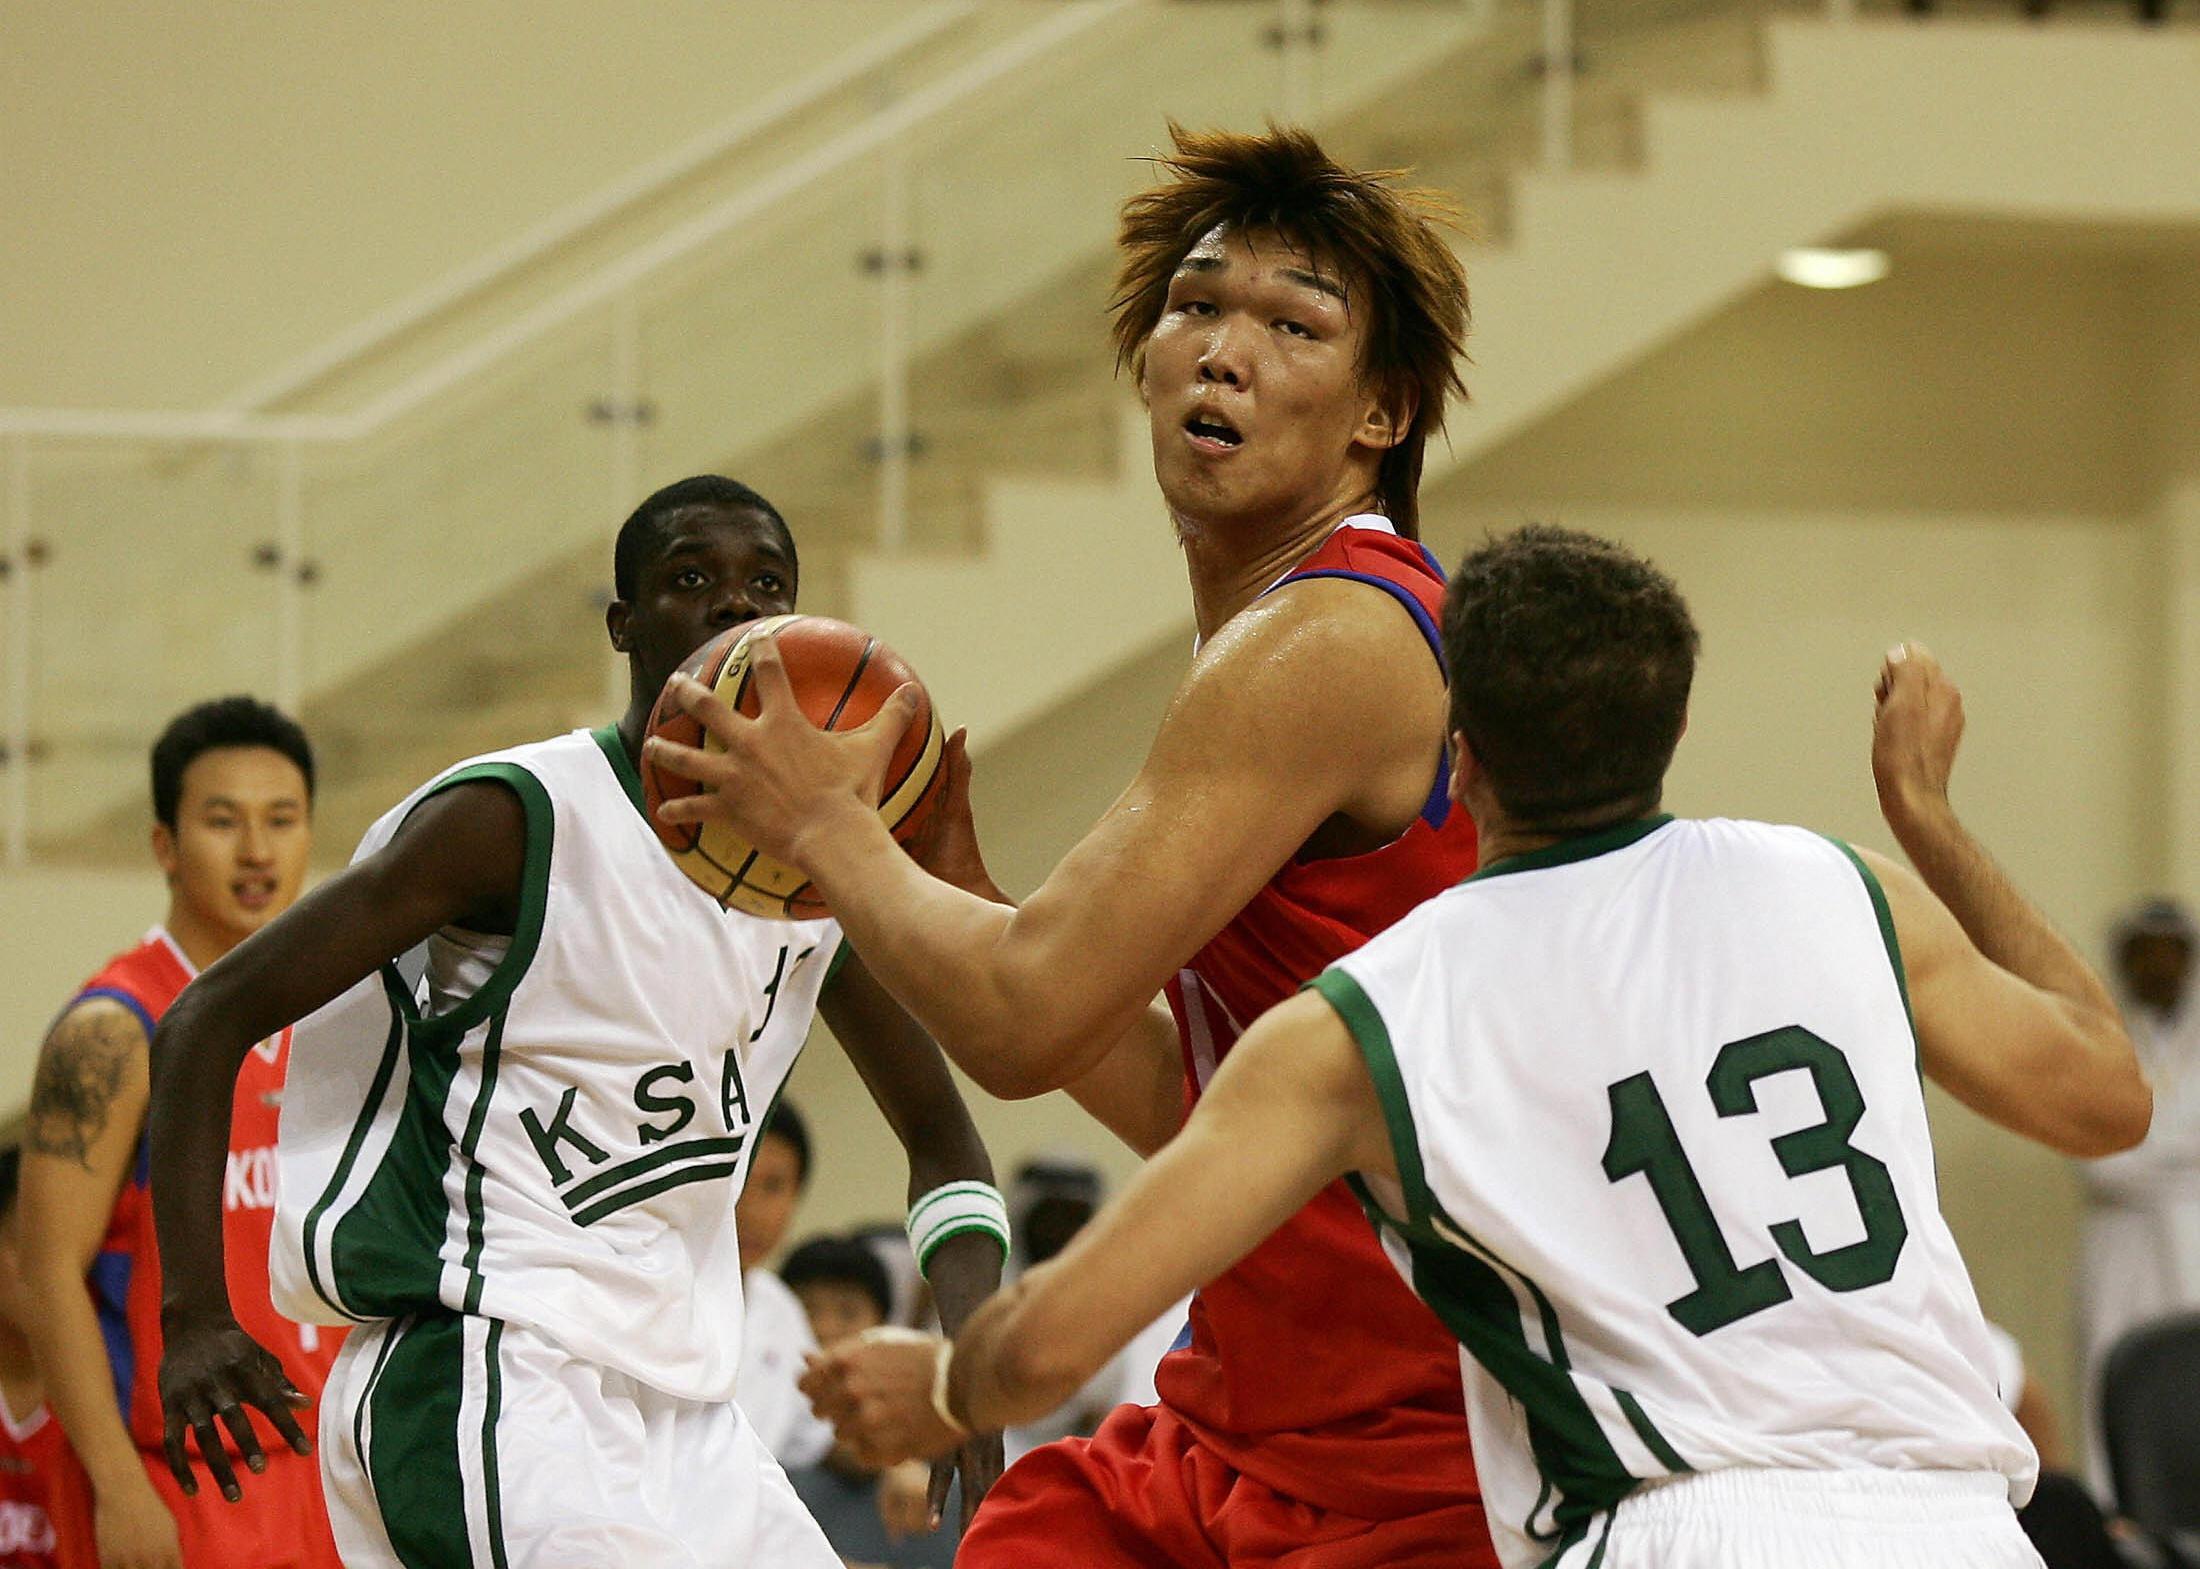 Ha Seung-Jin during a game at the al-Gharrafa hall in Doha.